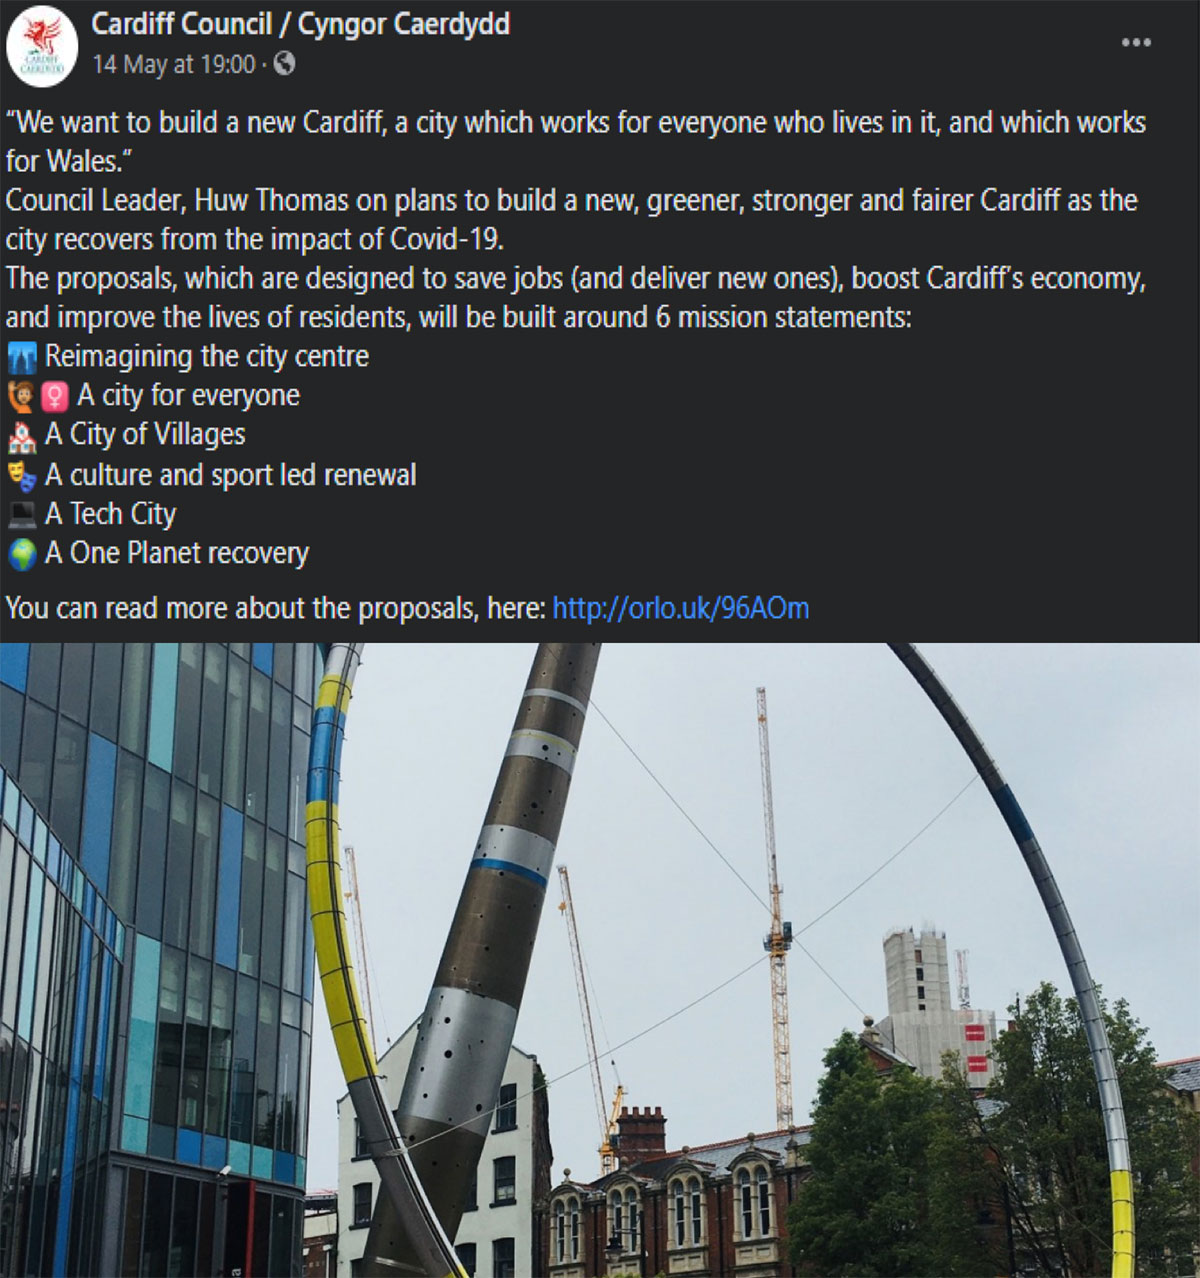 Cardiff Council social media post